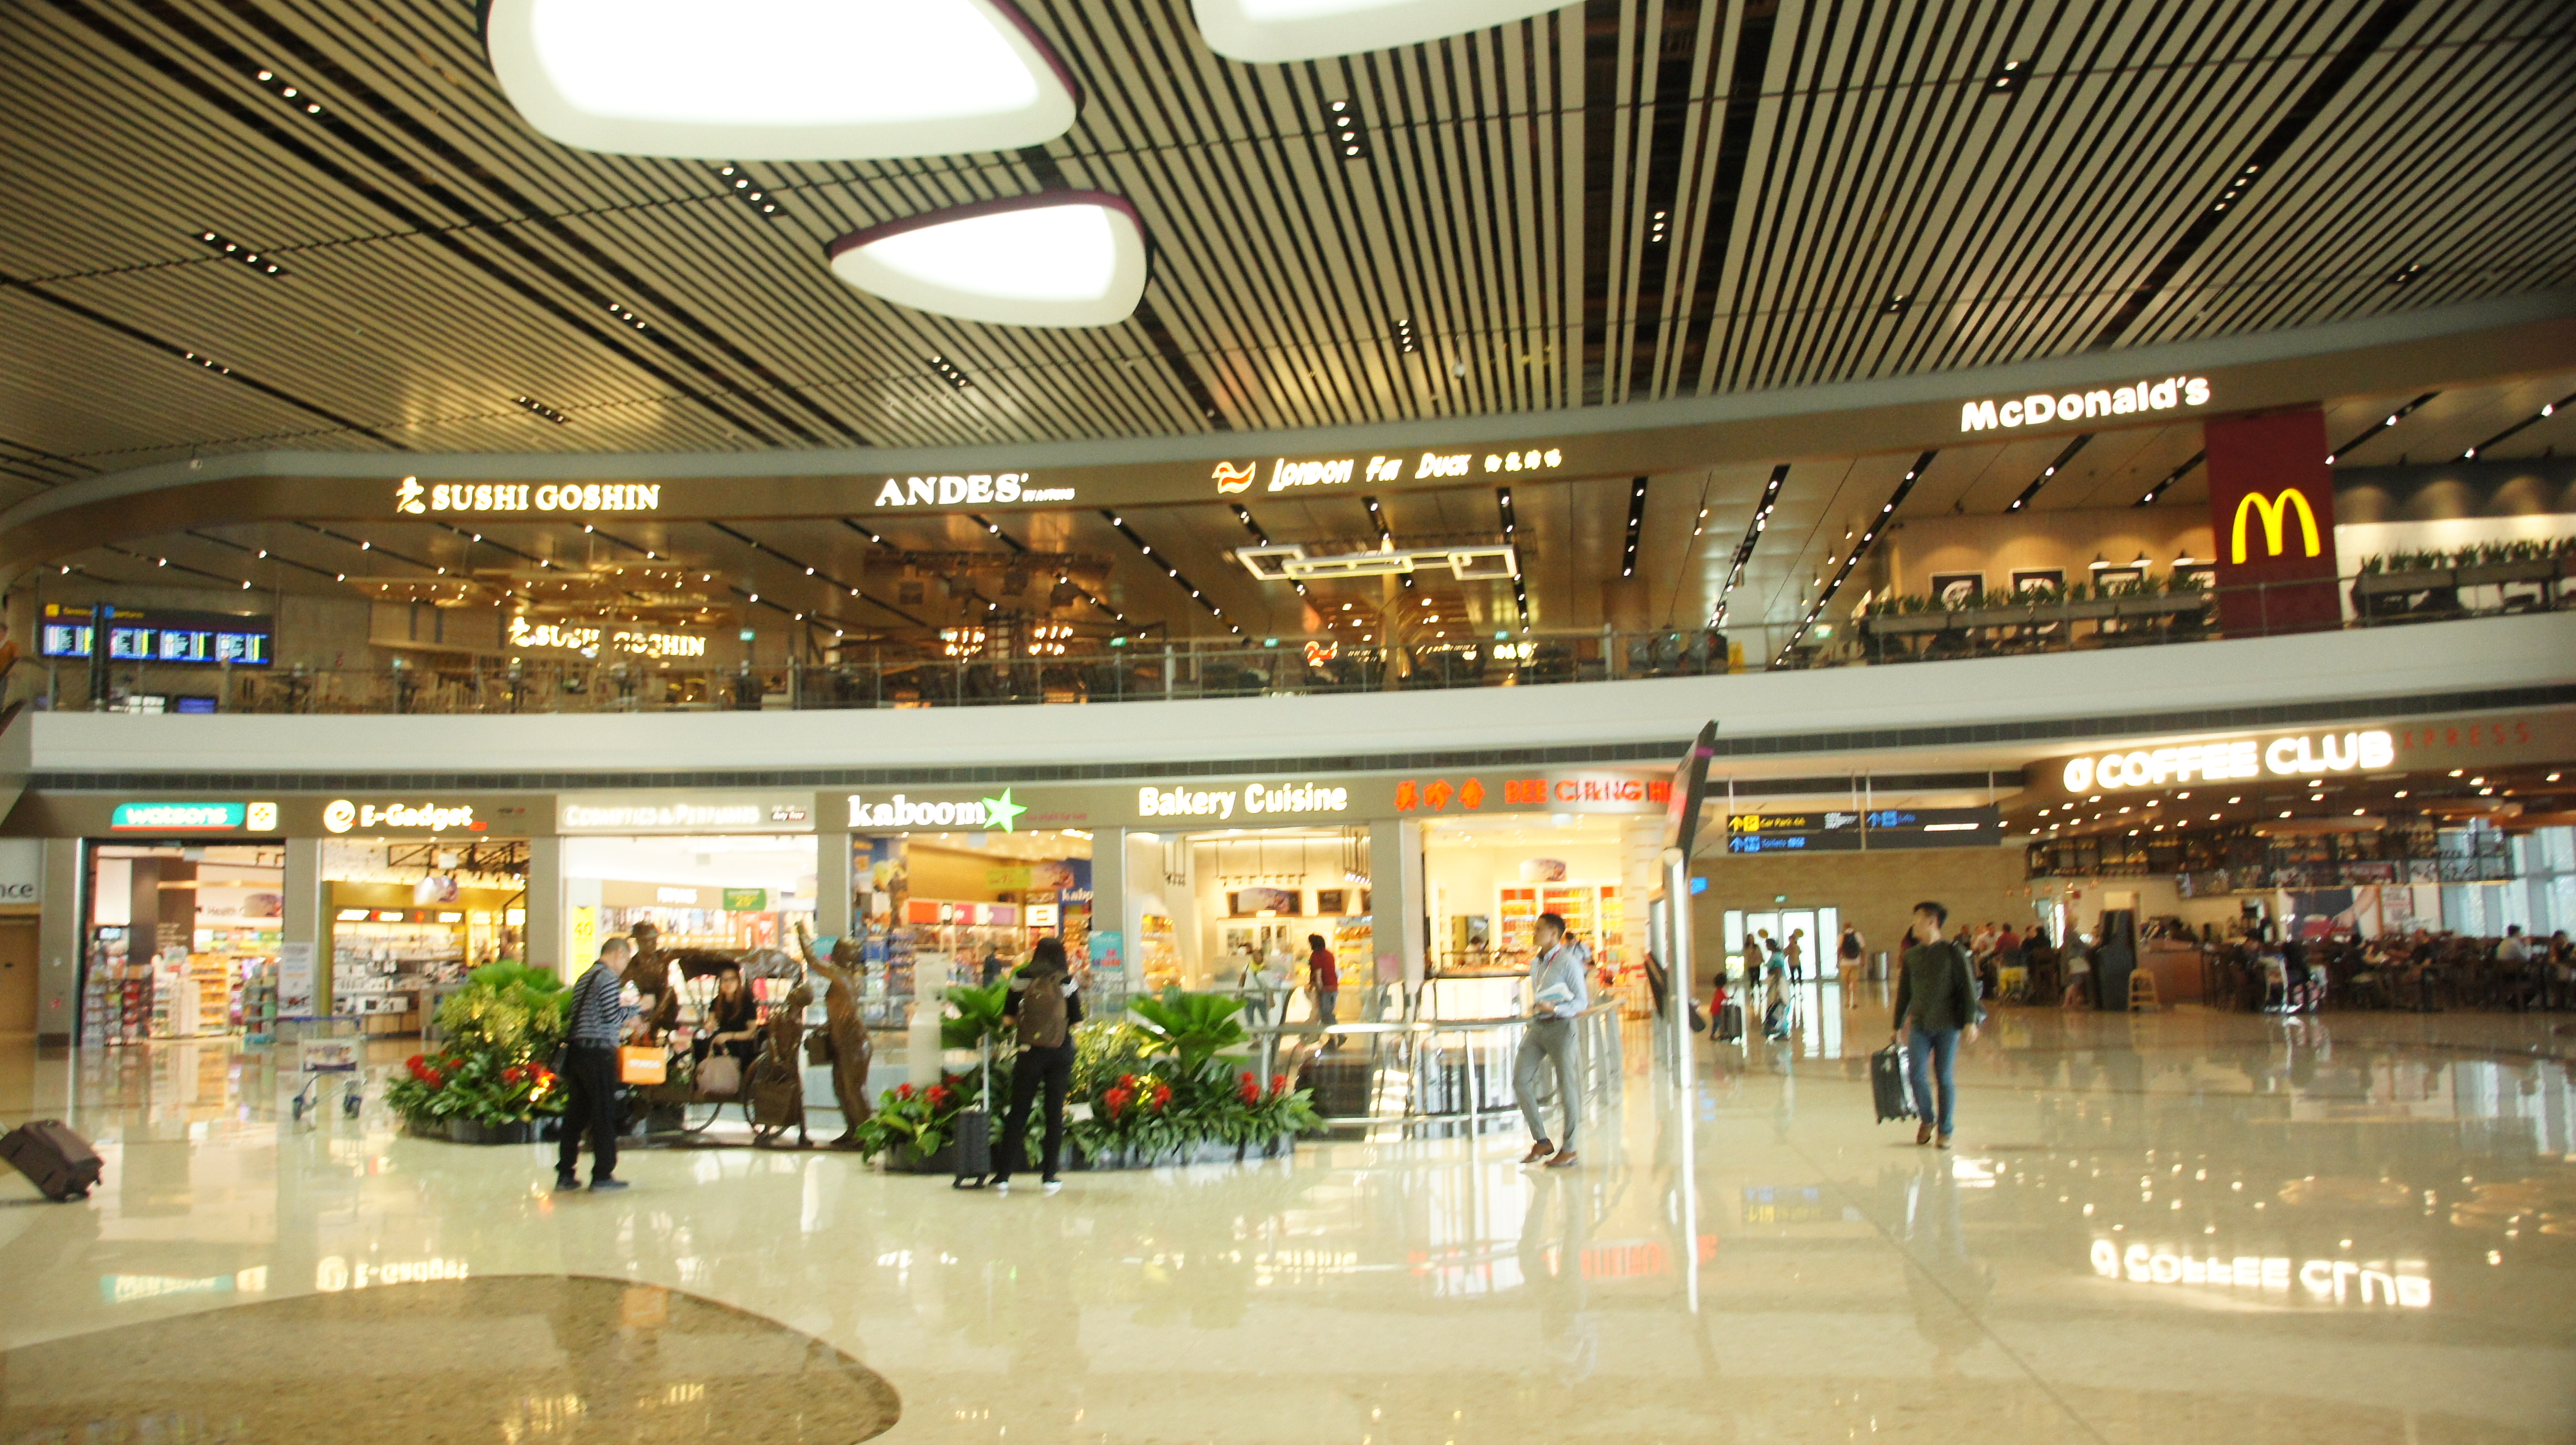 changi airport terminal 4